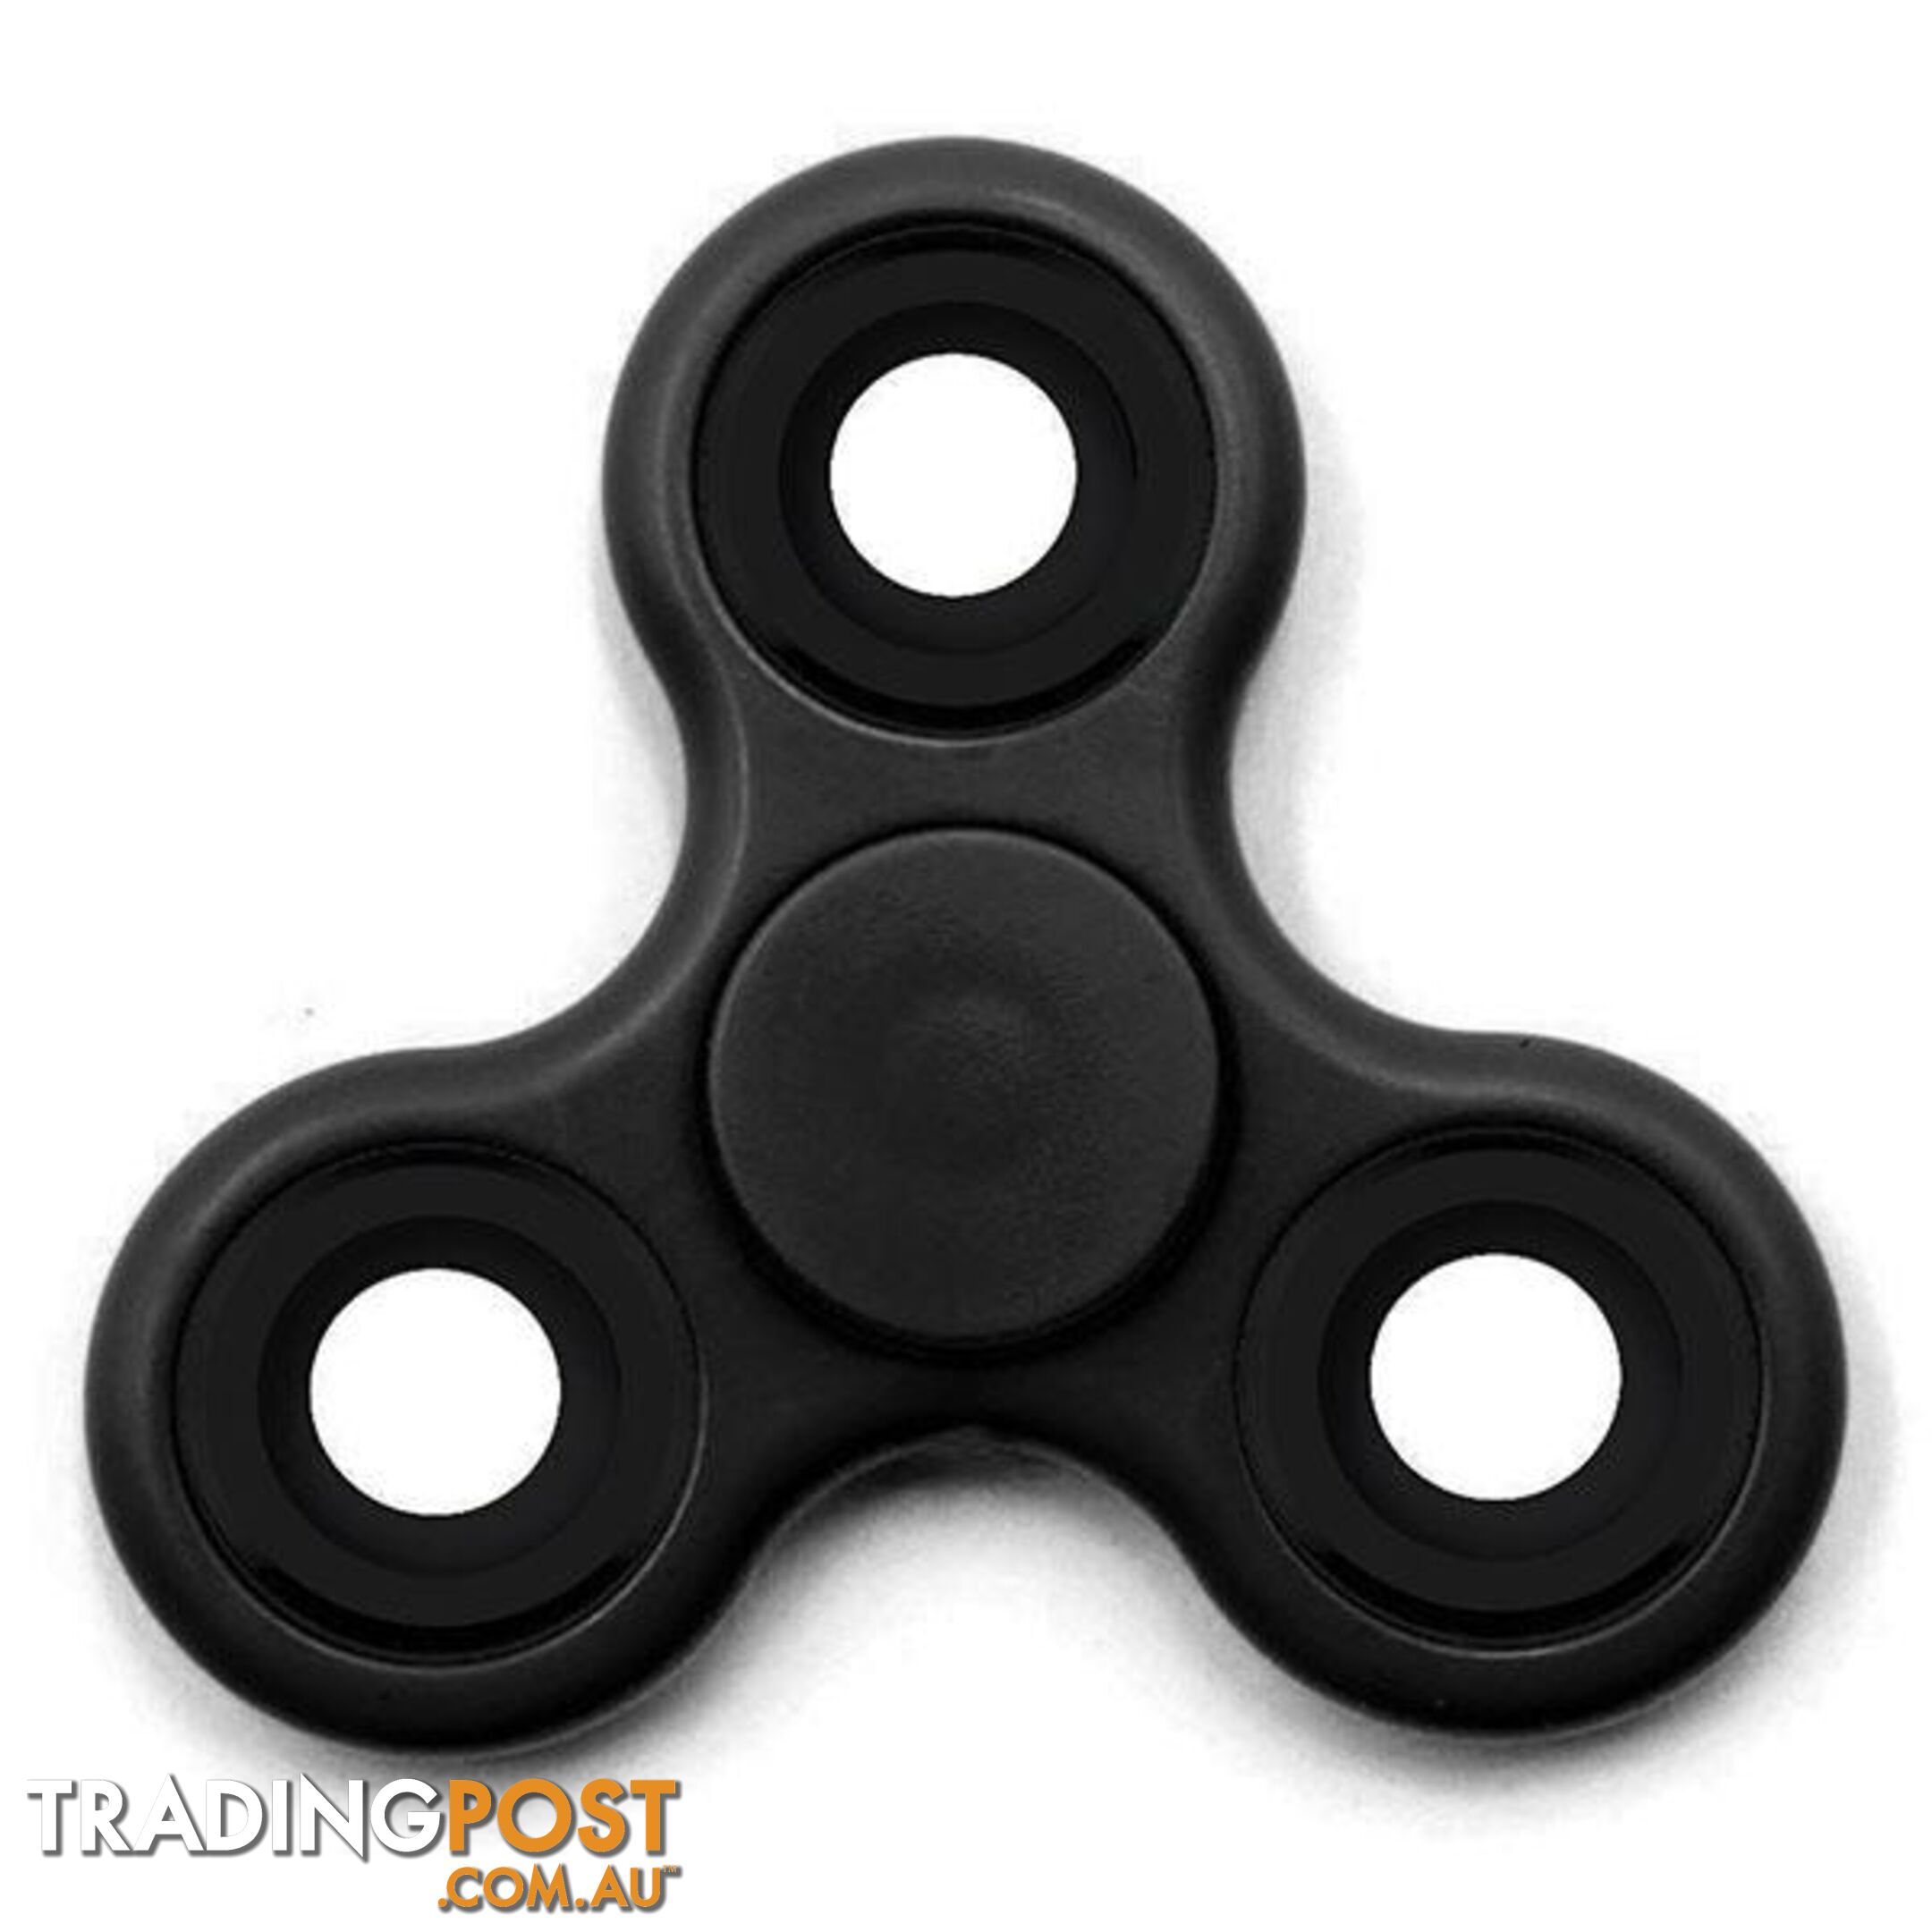 Fidget Spinner Tri Hand Stress Relief Toy - Unbranded - 9476062131456